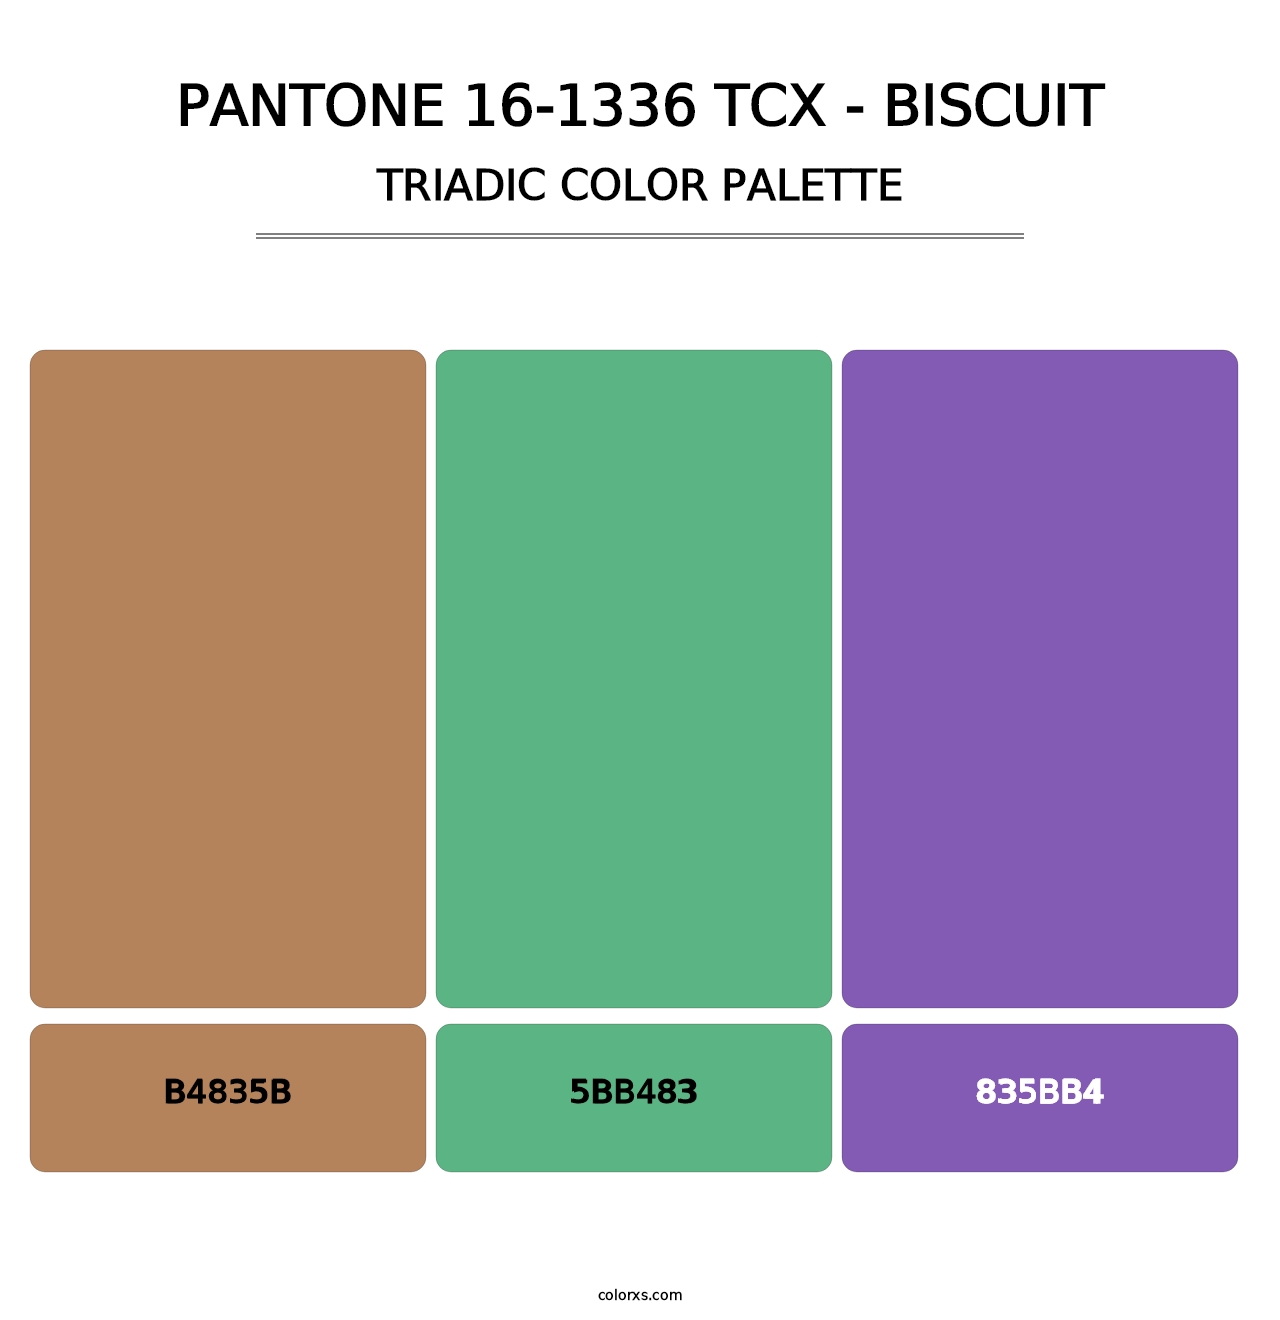 PANTONE 16-1336 TCX - Biscuit - Triadic Color Palette